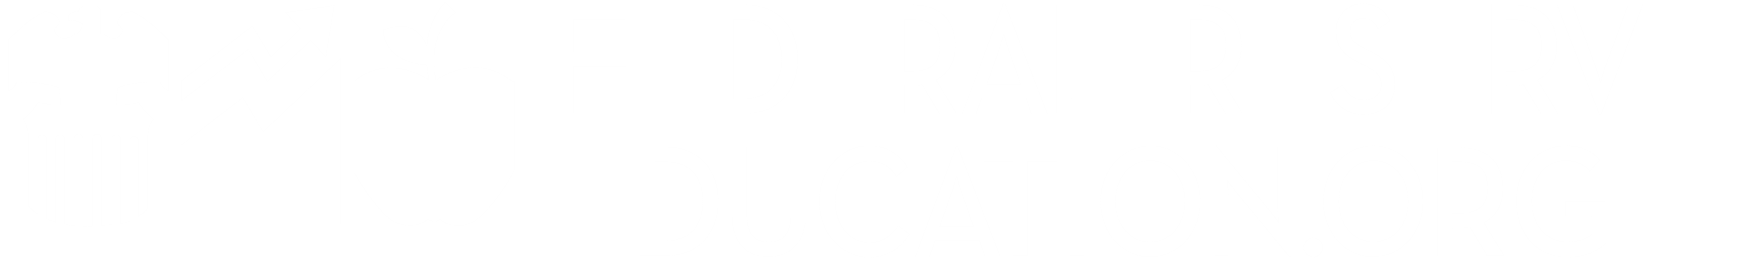 Federal Reserve Education logo